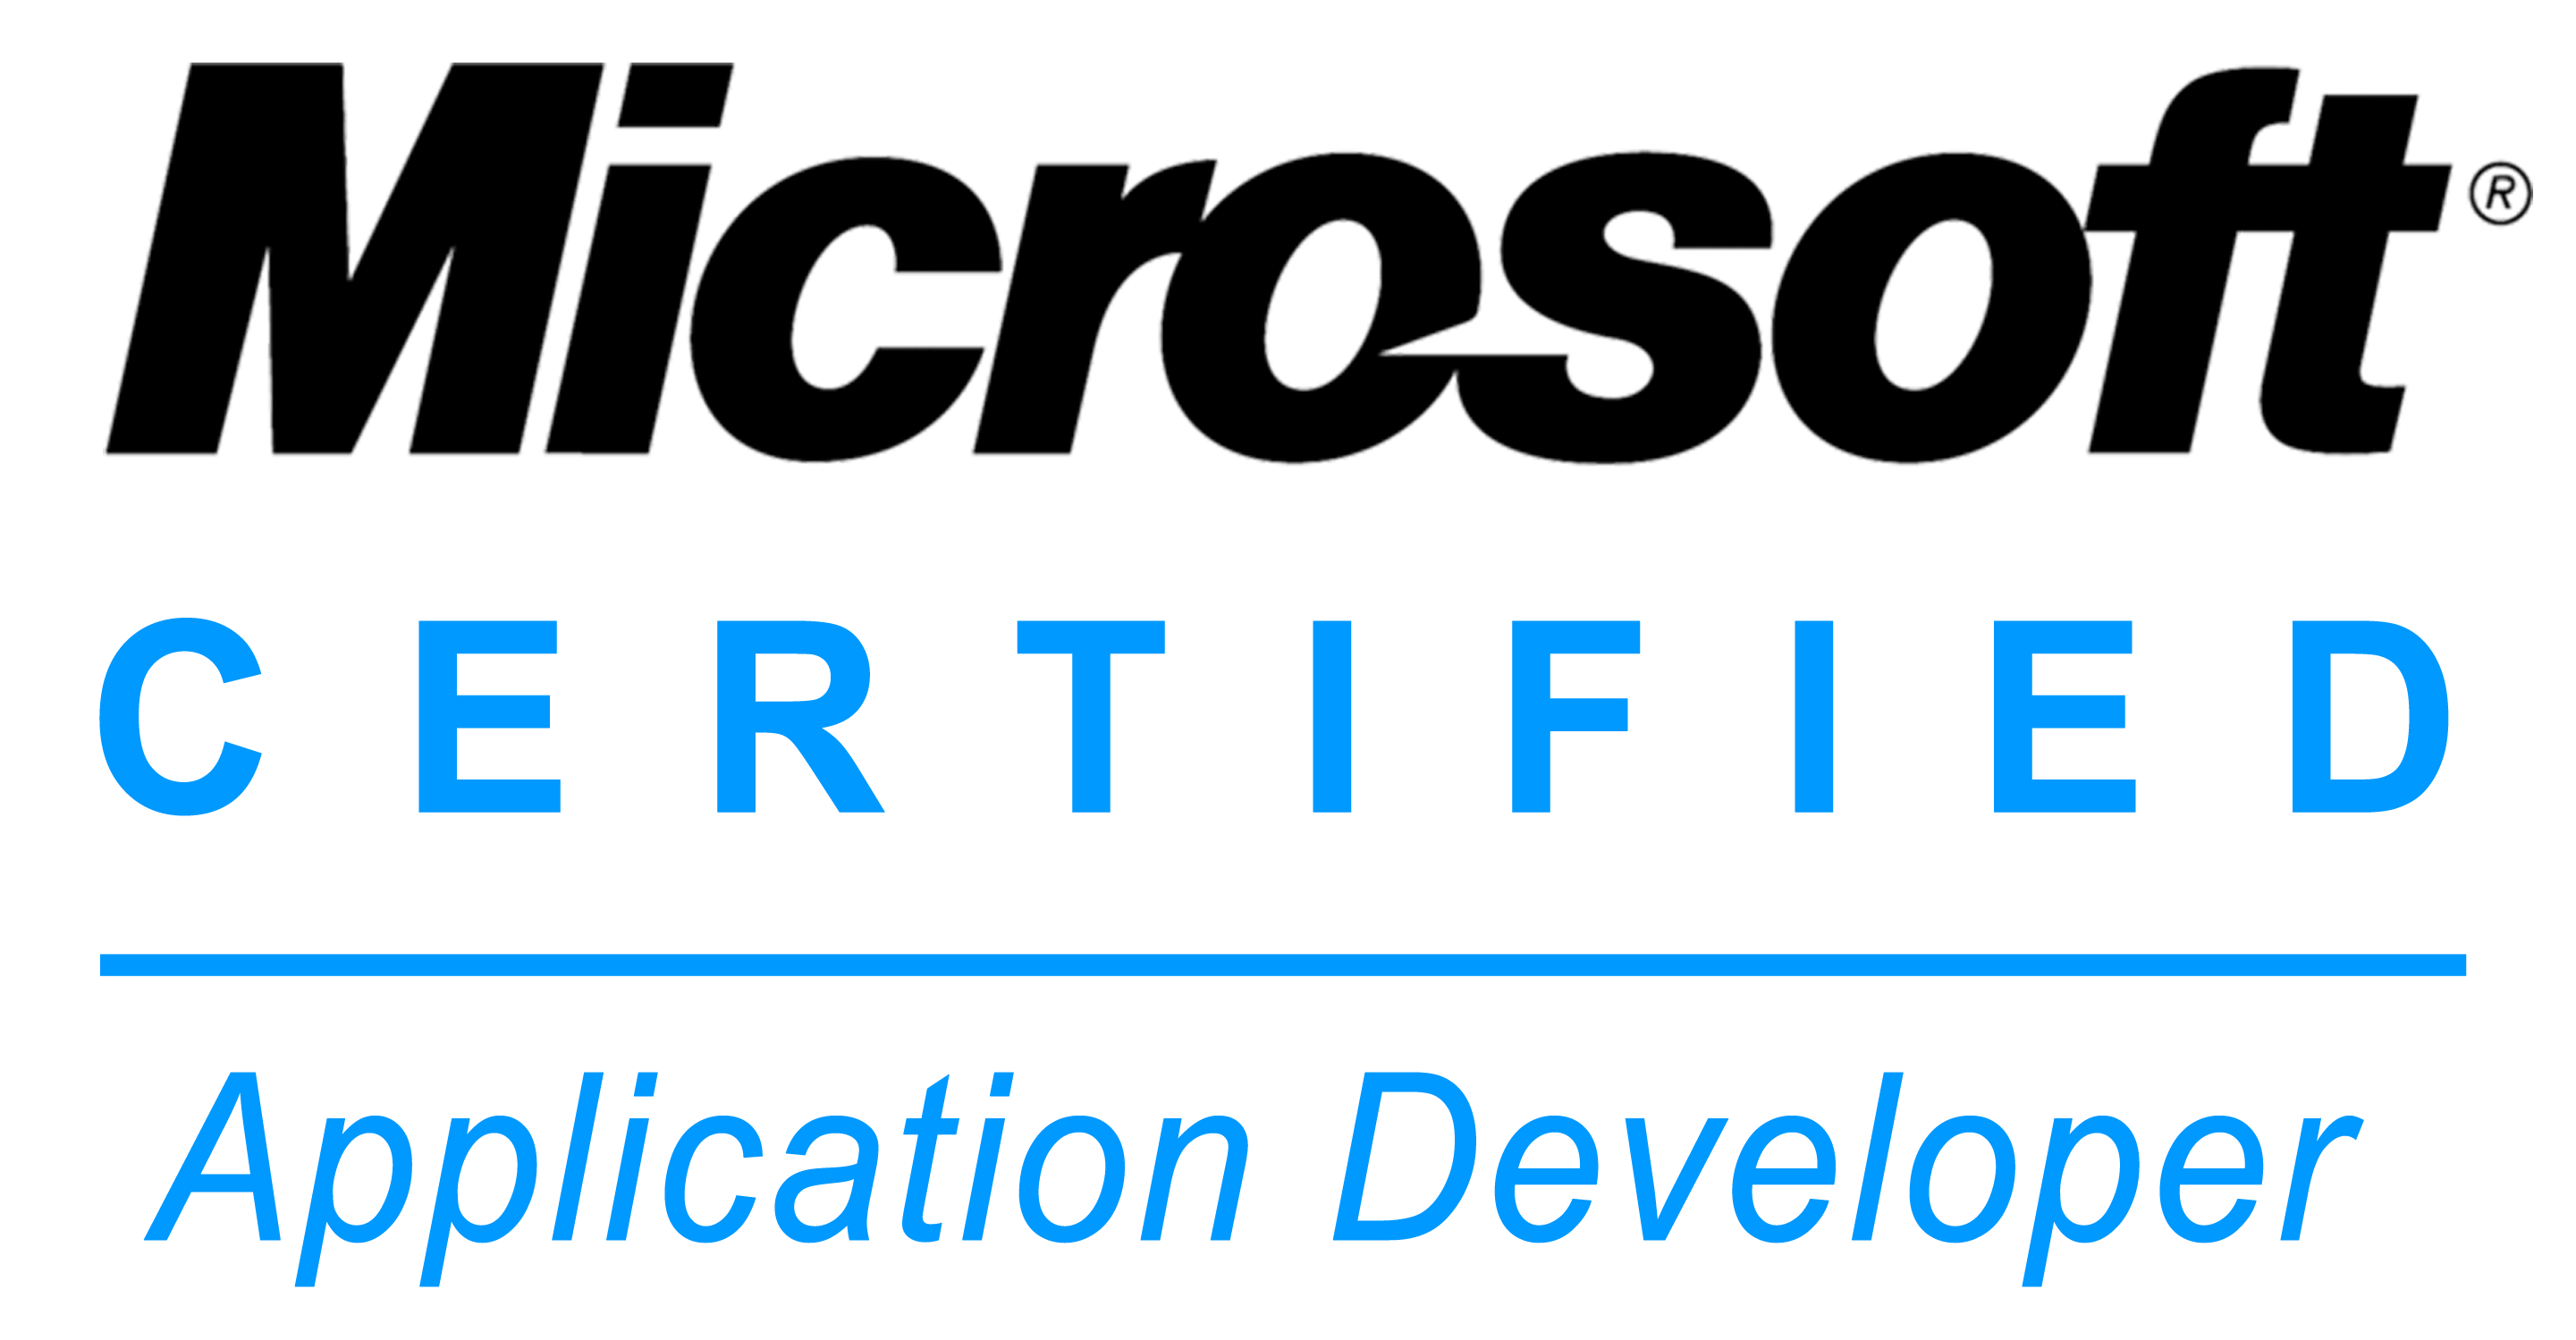 Microsoft Certified Logo - File:MCAD logo.png - Wikimedia Commons